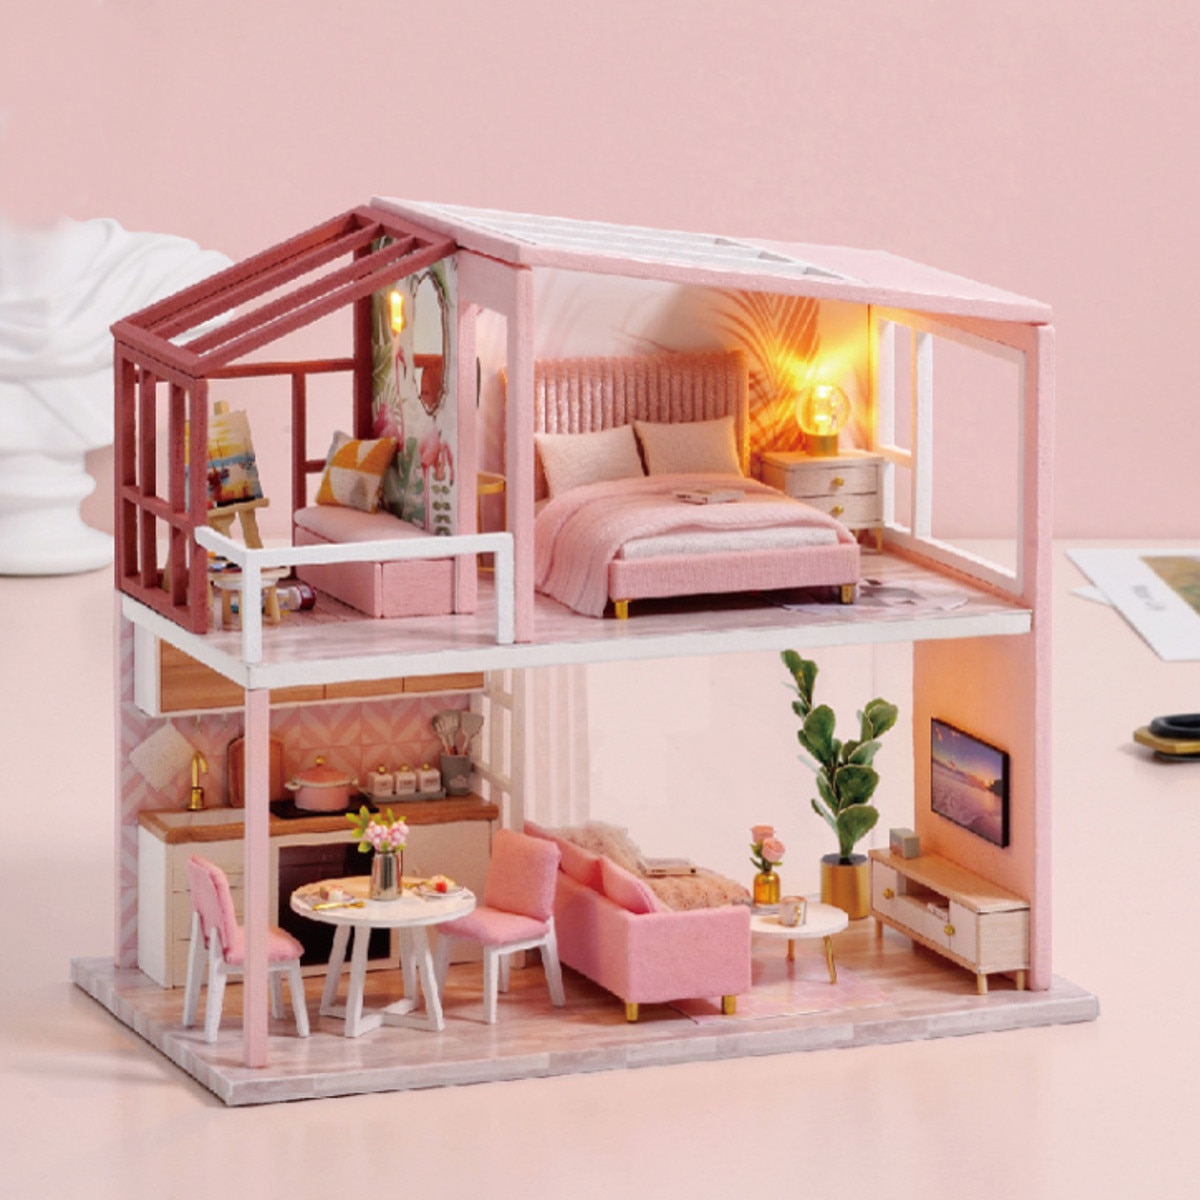 Cutebee Meet Happiness QL02A DIY Nordic Dollhouse